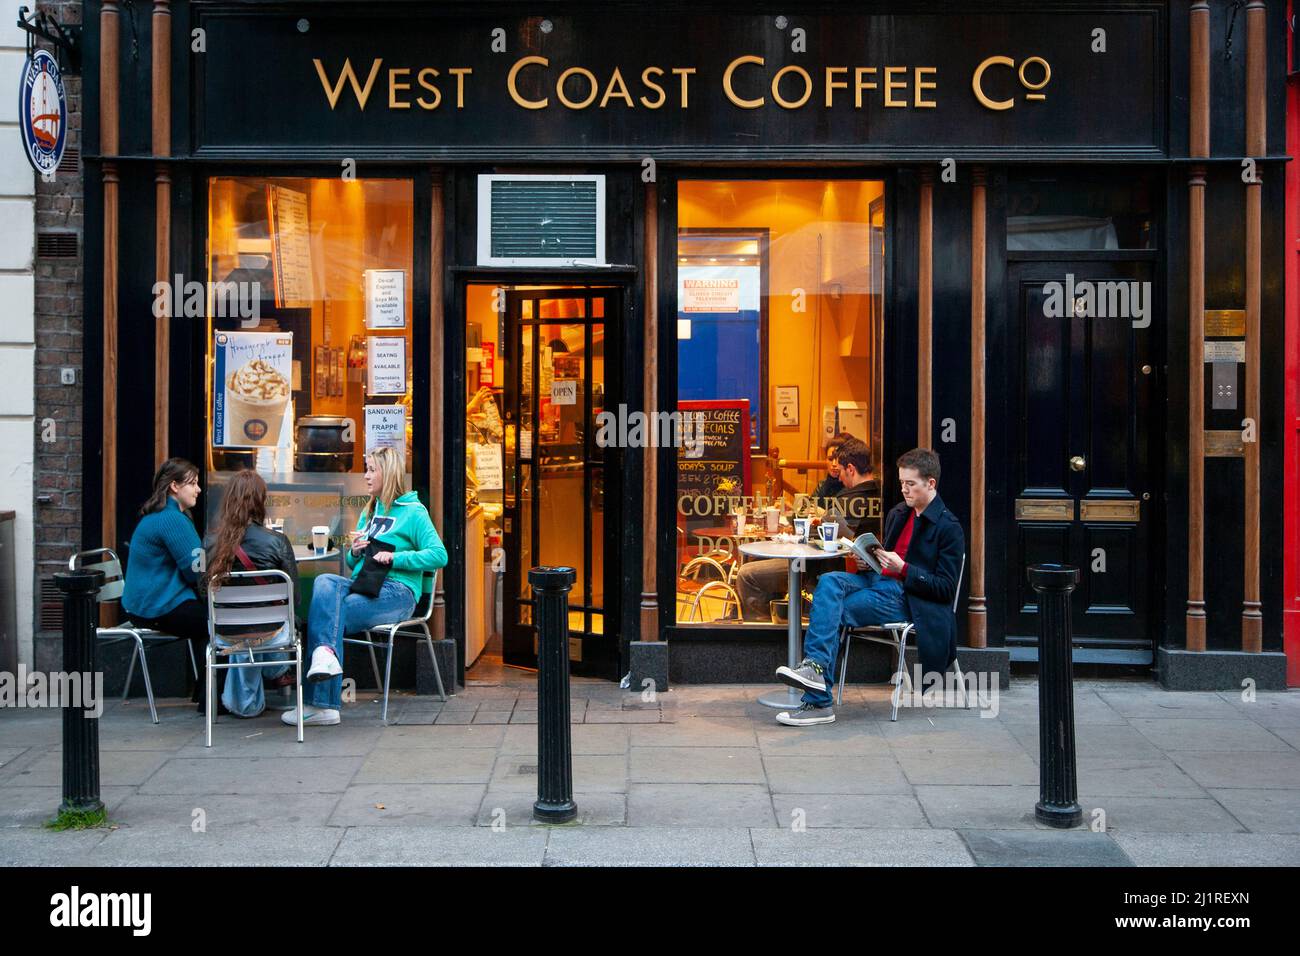 west coast coffee company Stock Photo